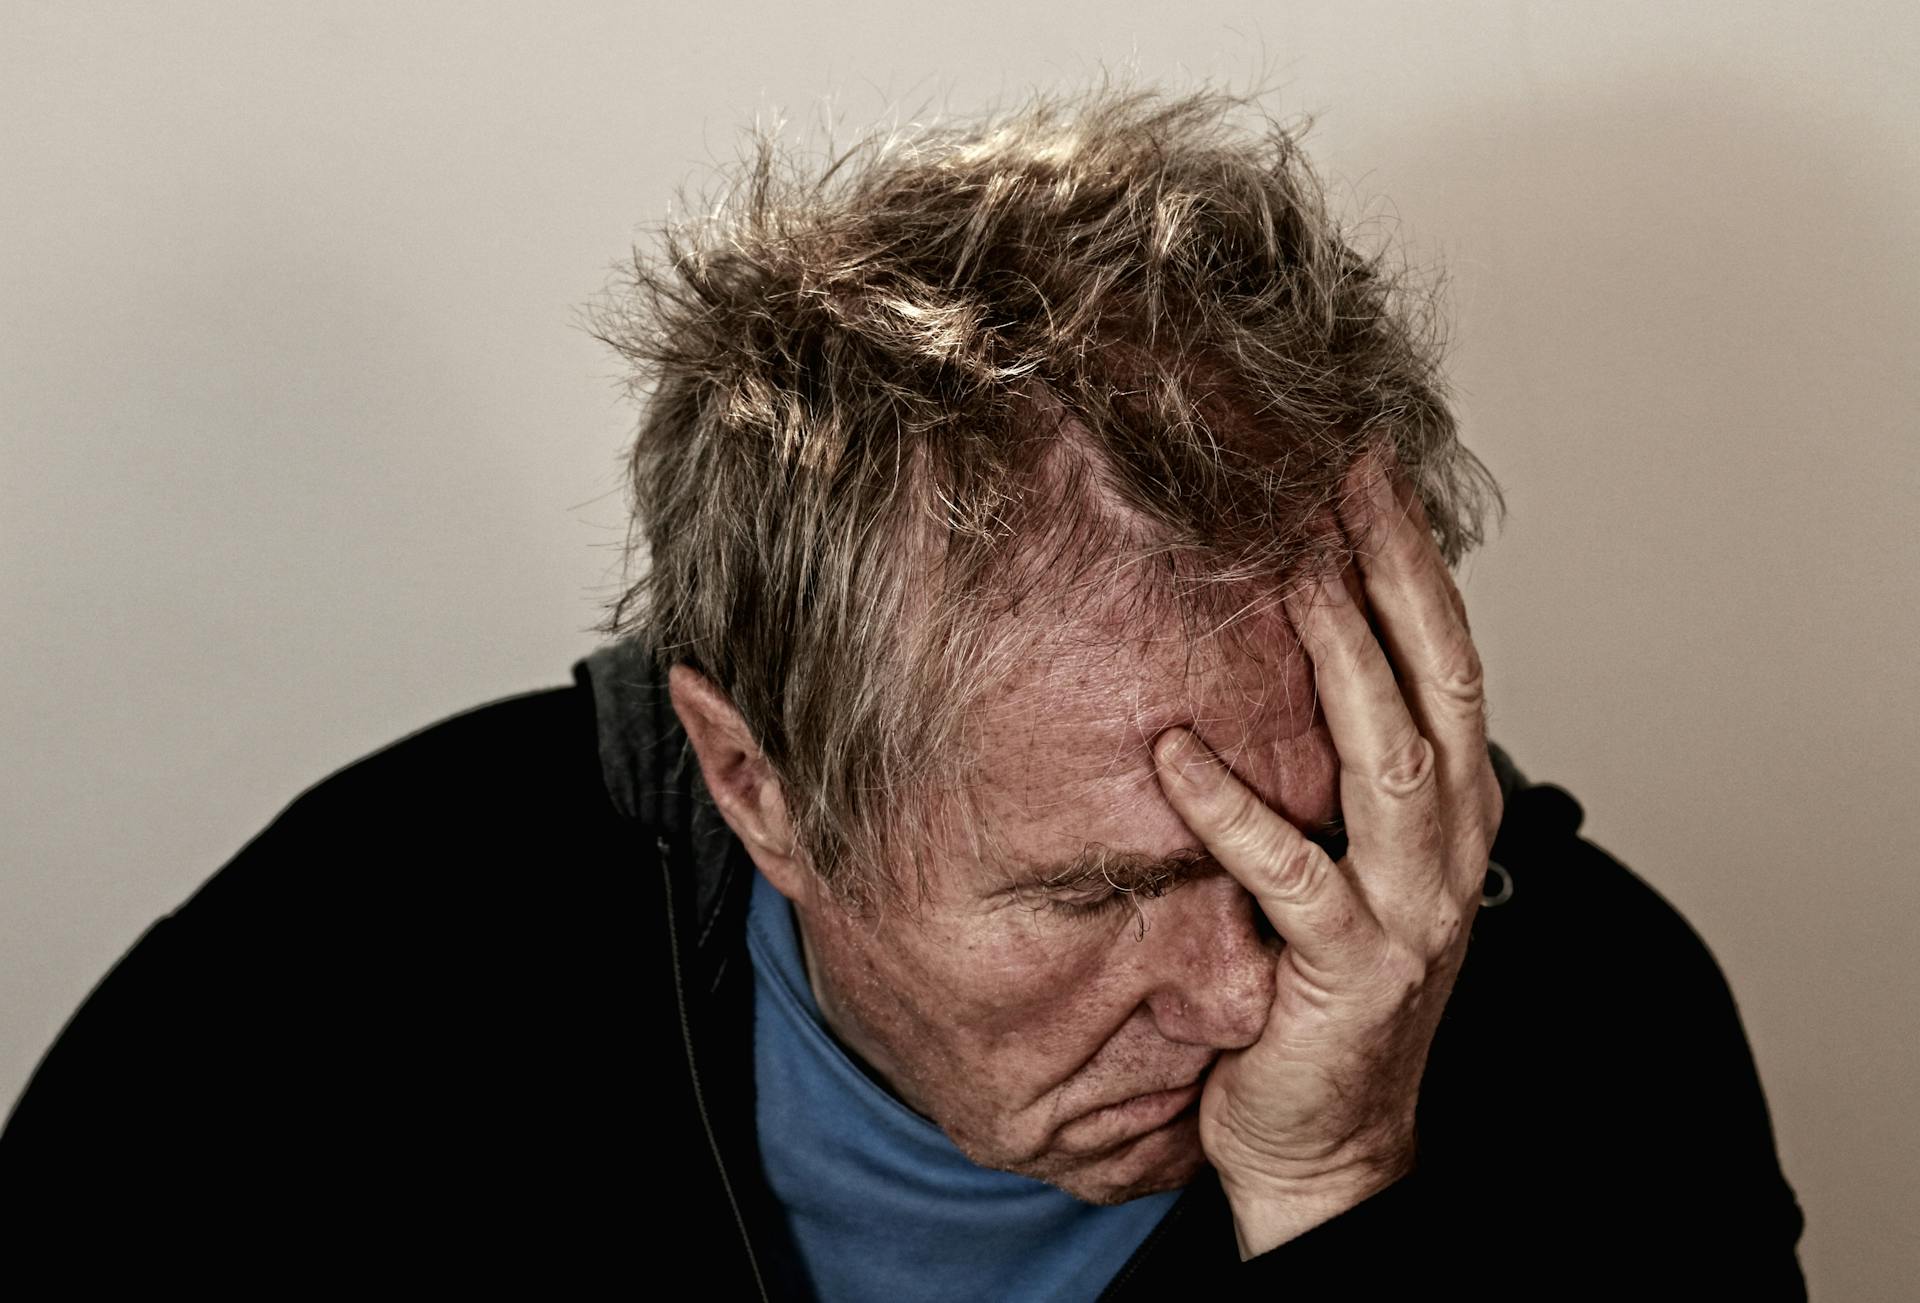 A depressed senior man | Source: Pexels